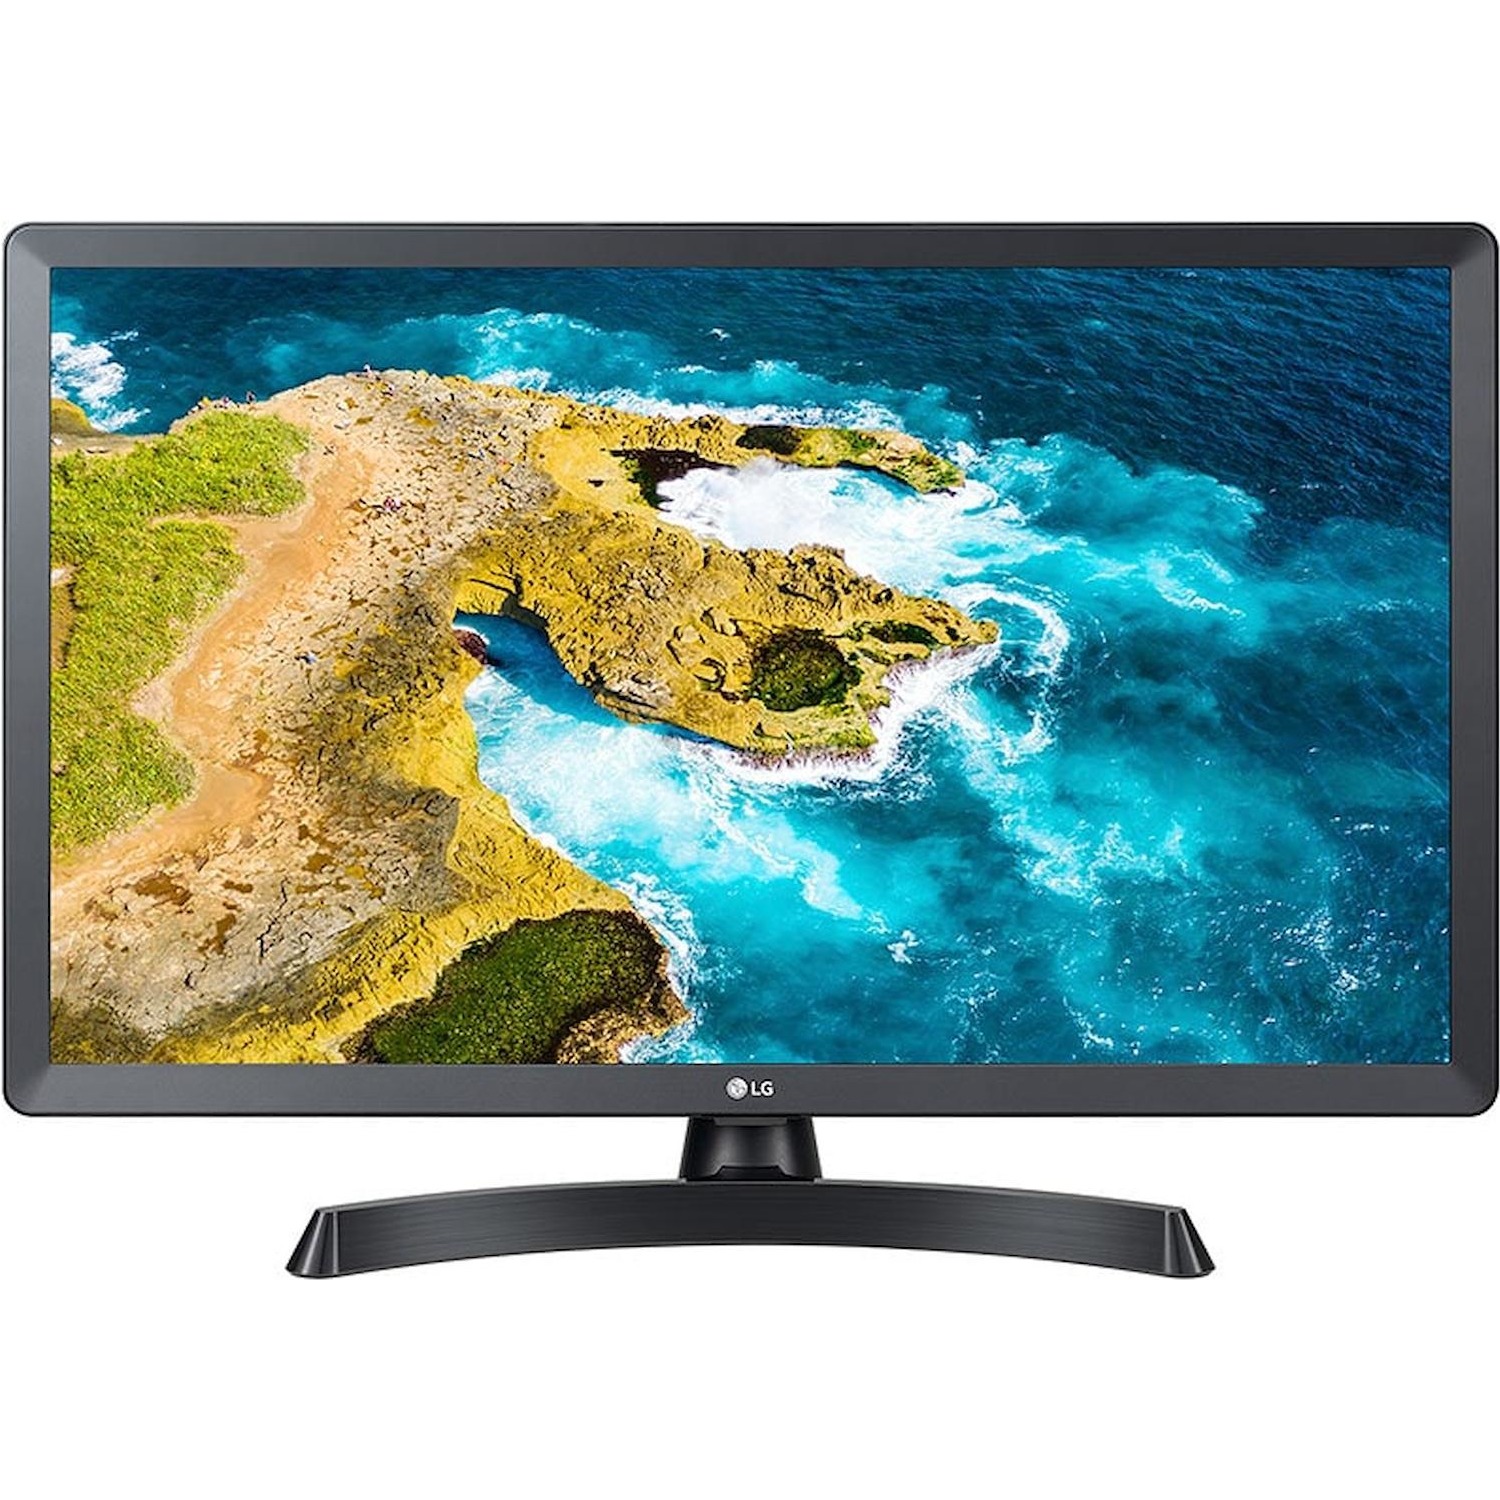 Immagine per TV LED Monitor Smart LG 28TQ515S-PZ nero da DIMOStore